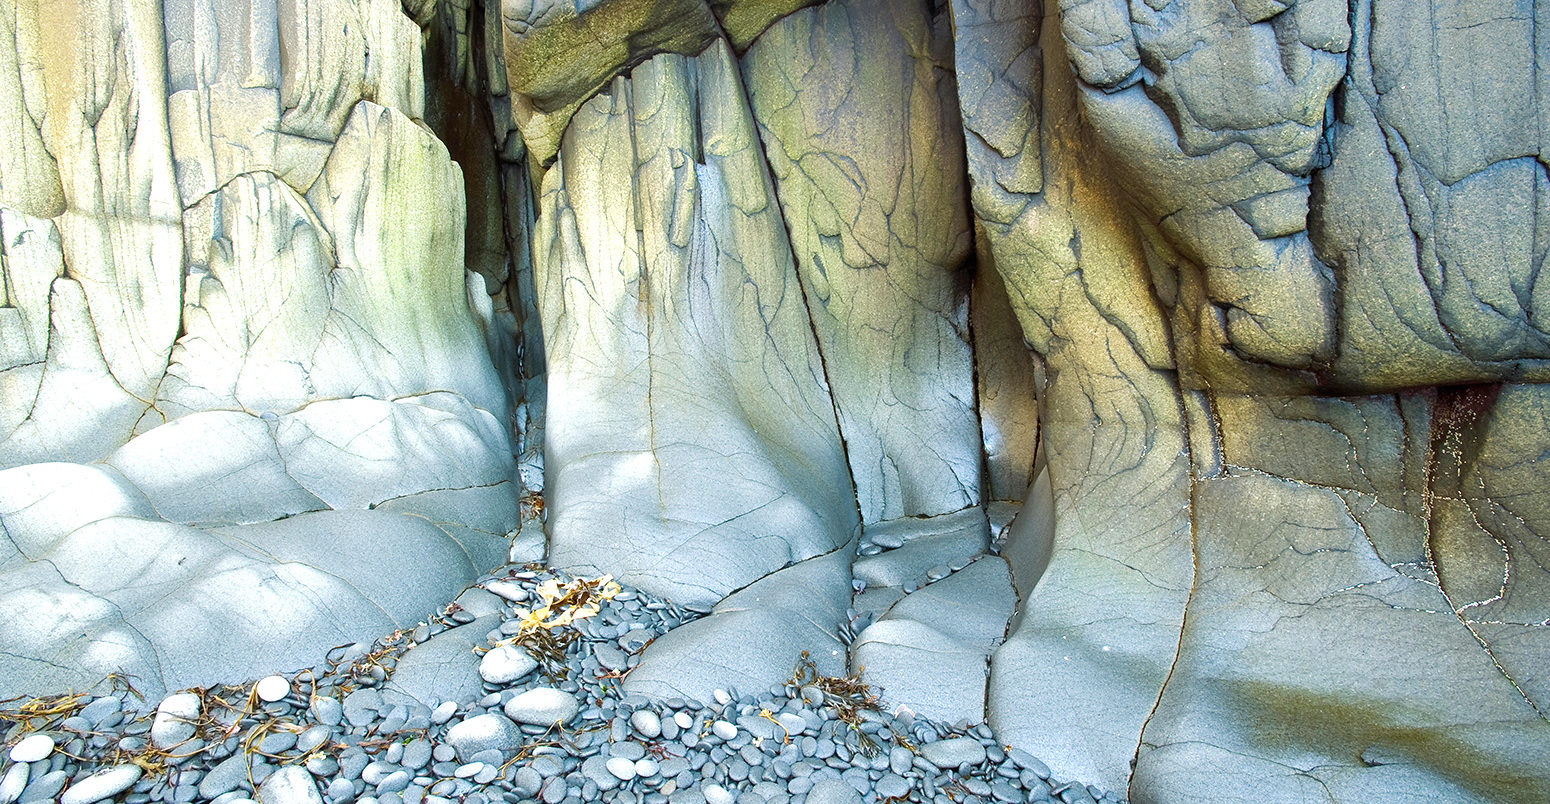 Basalt rock erosion details, Brier Island, Bay of Fundy, Nova Scotia, Canada. Credit: All Canada Photos / Alamy Stock Photo KCNR0T